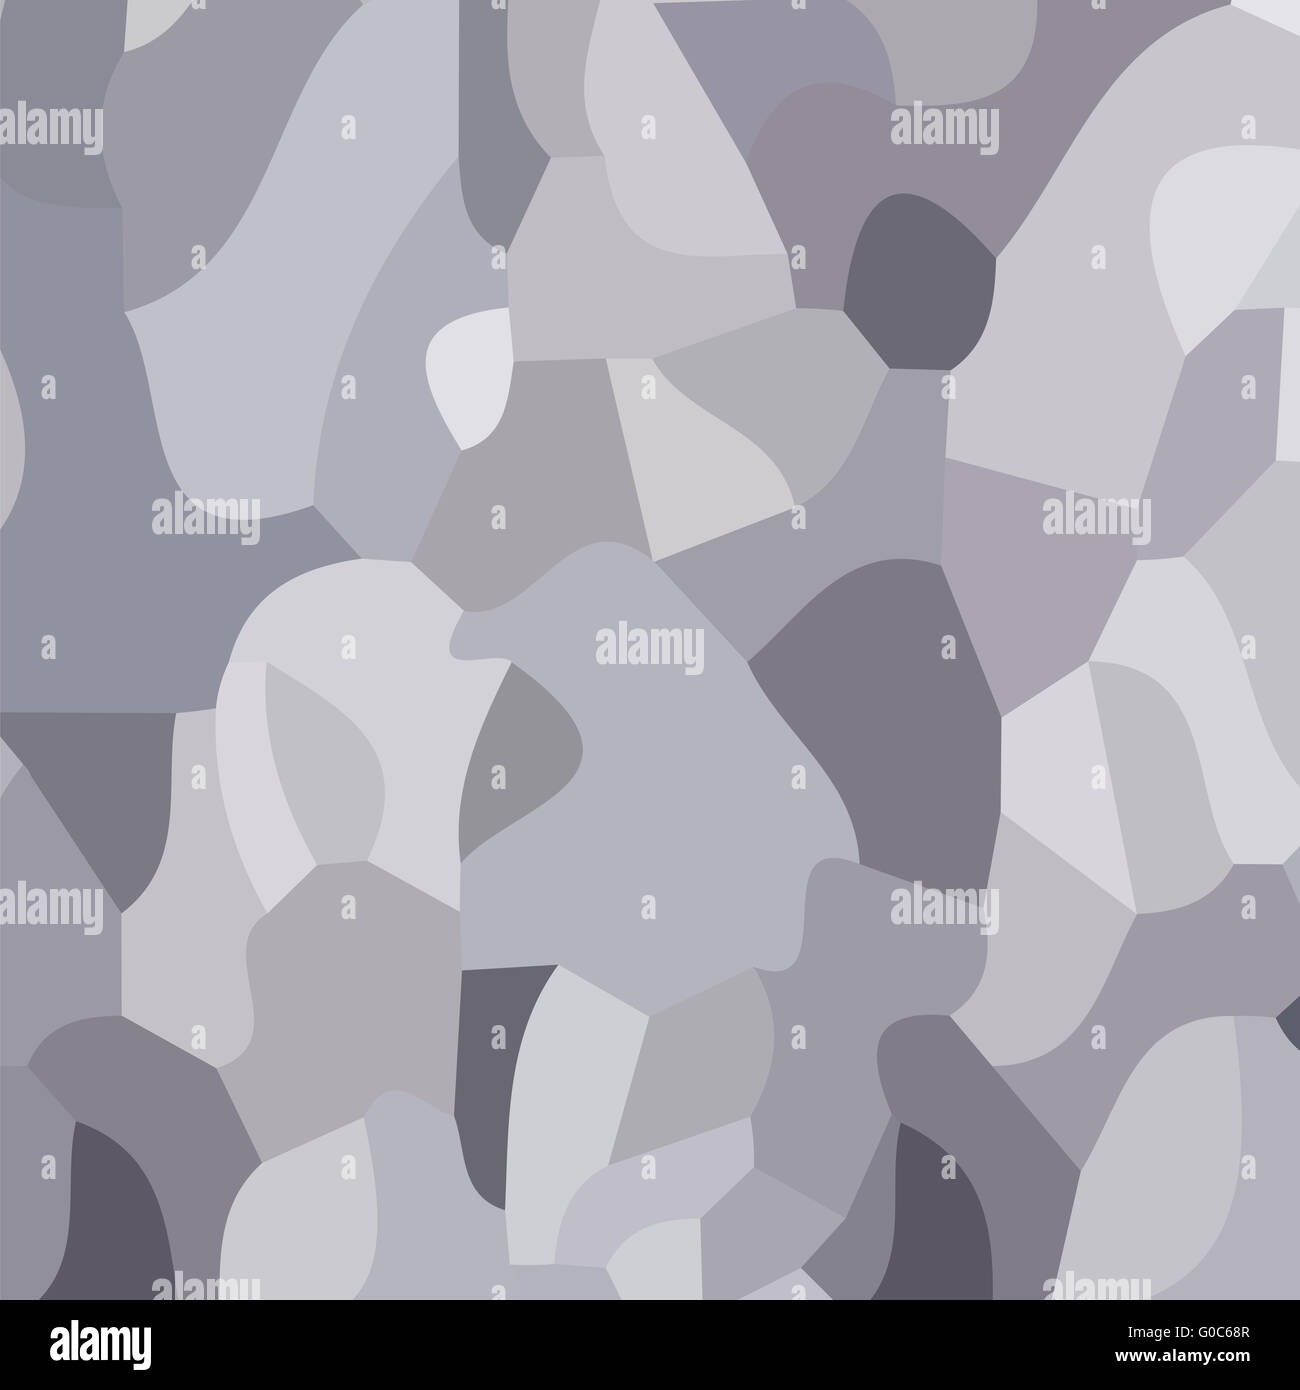 Abstract background khaki grey military pattern Stock Photo